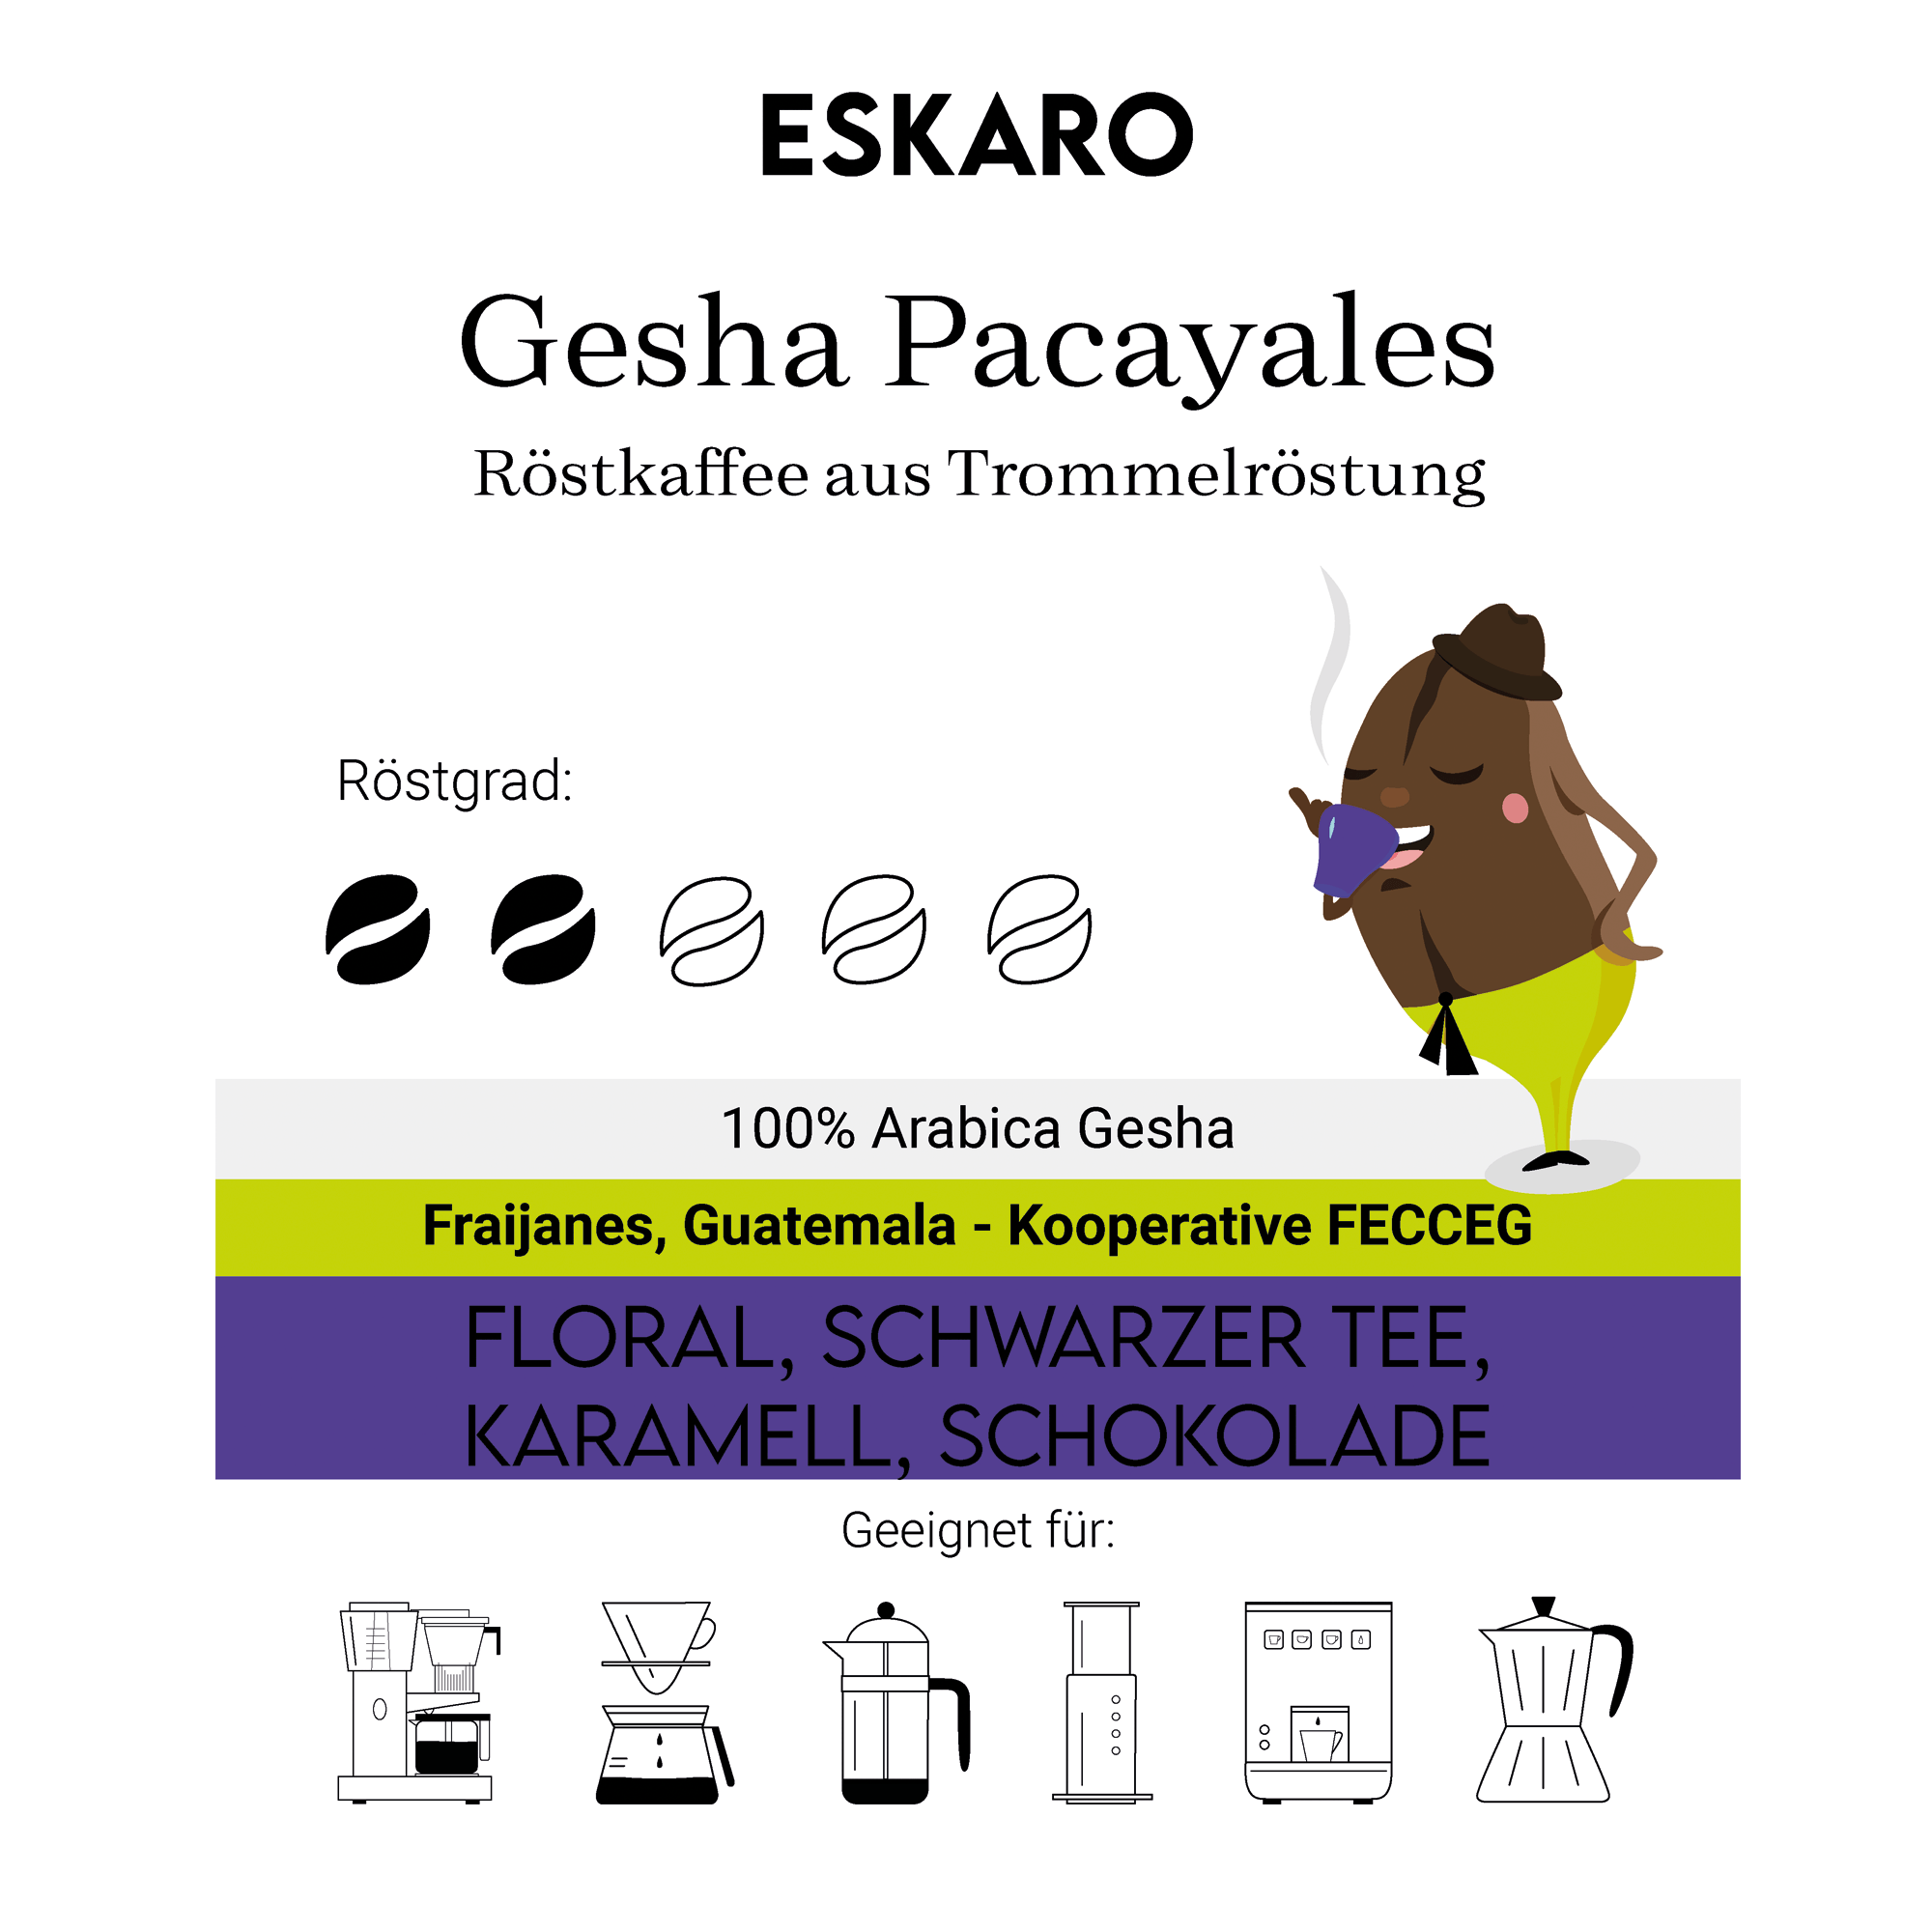 Eskaro Filterkaffee Gesha Pacayales - Eskaro - Esser Kaffeerösterei und Handelsgesellschaft mbH